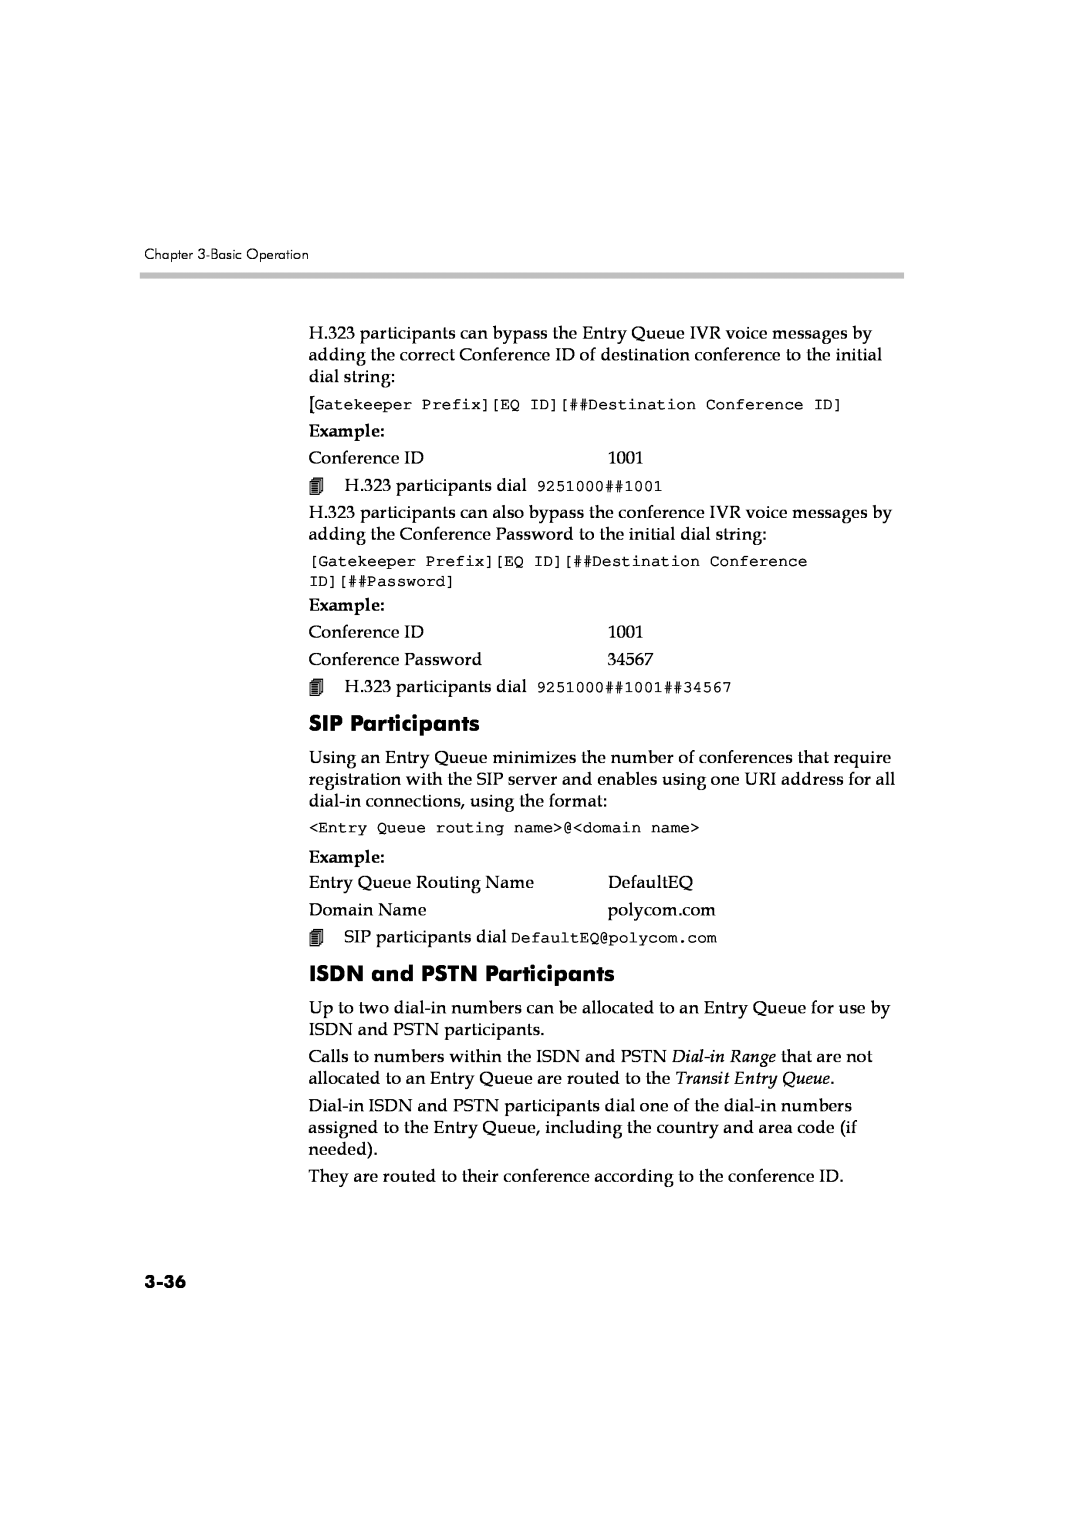 Polycom DOC2560A manual ISDN and PSTN Participants, 3-36, SIP Participants, Example 